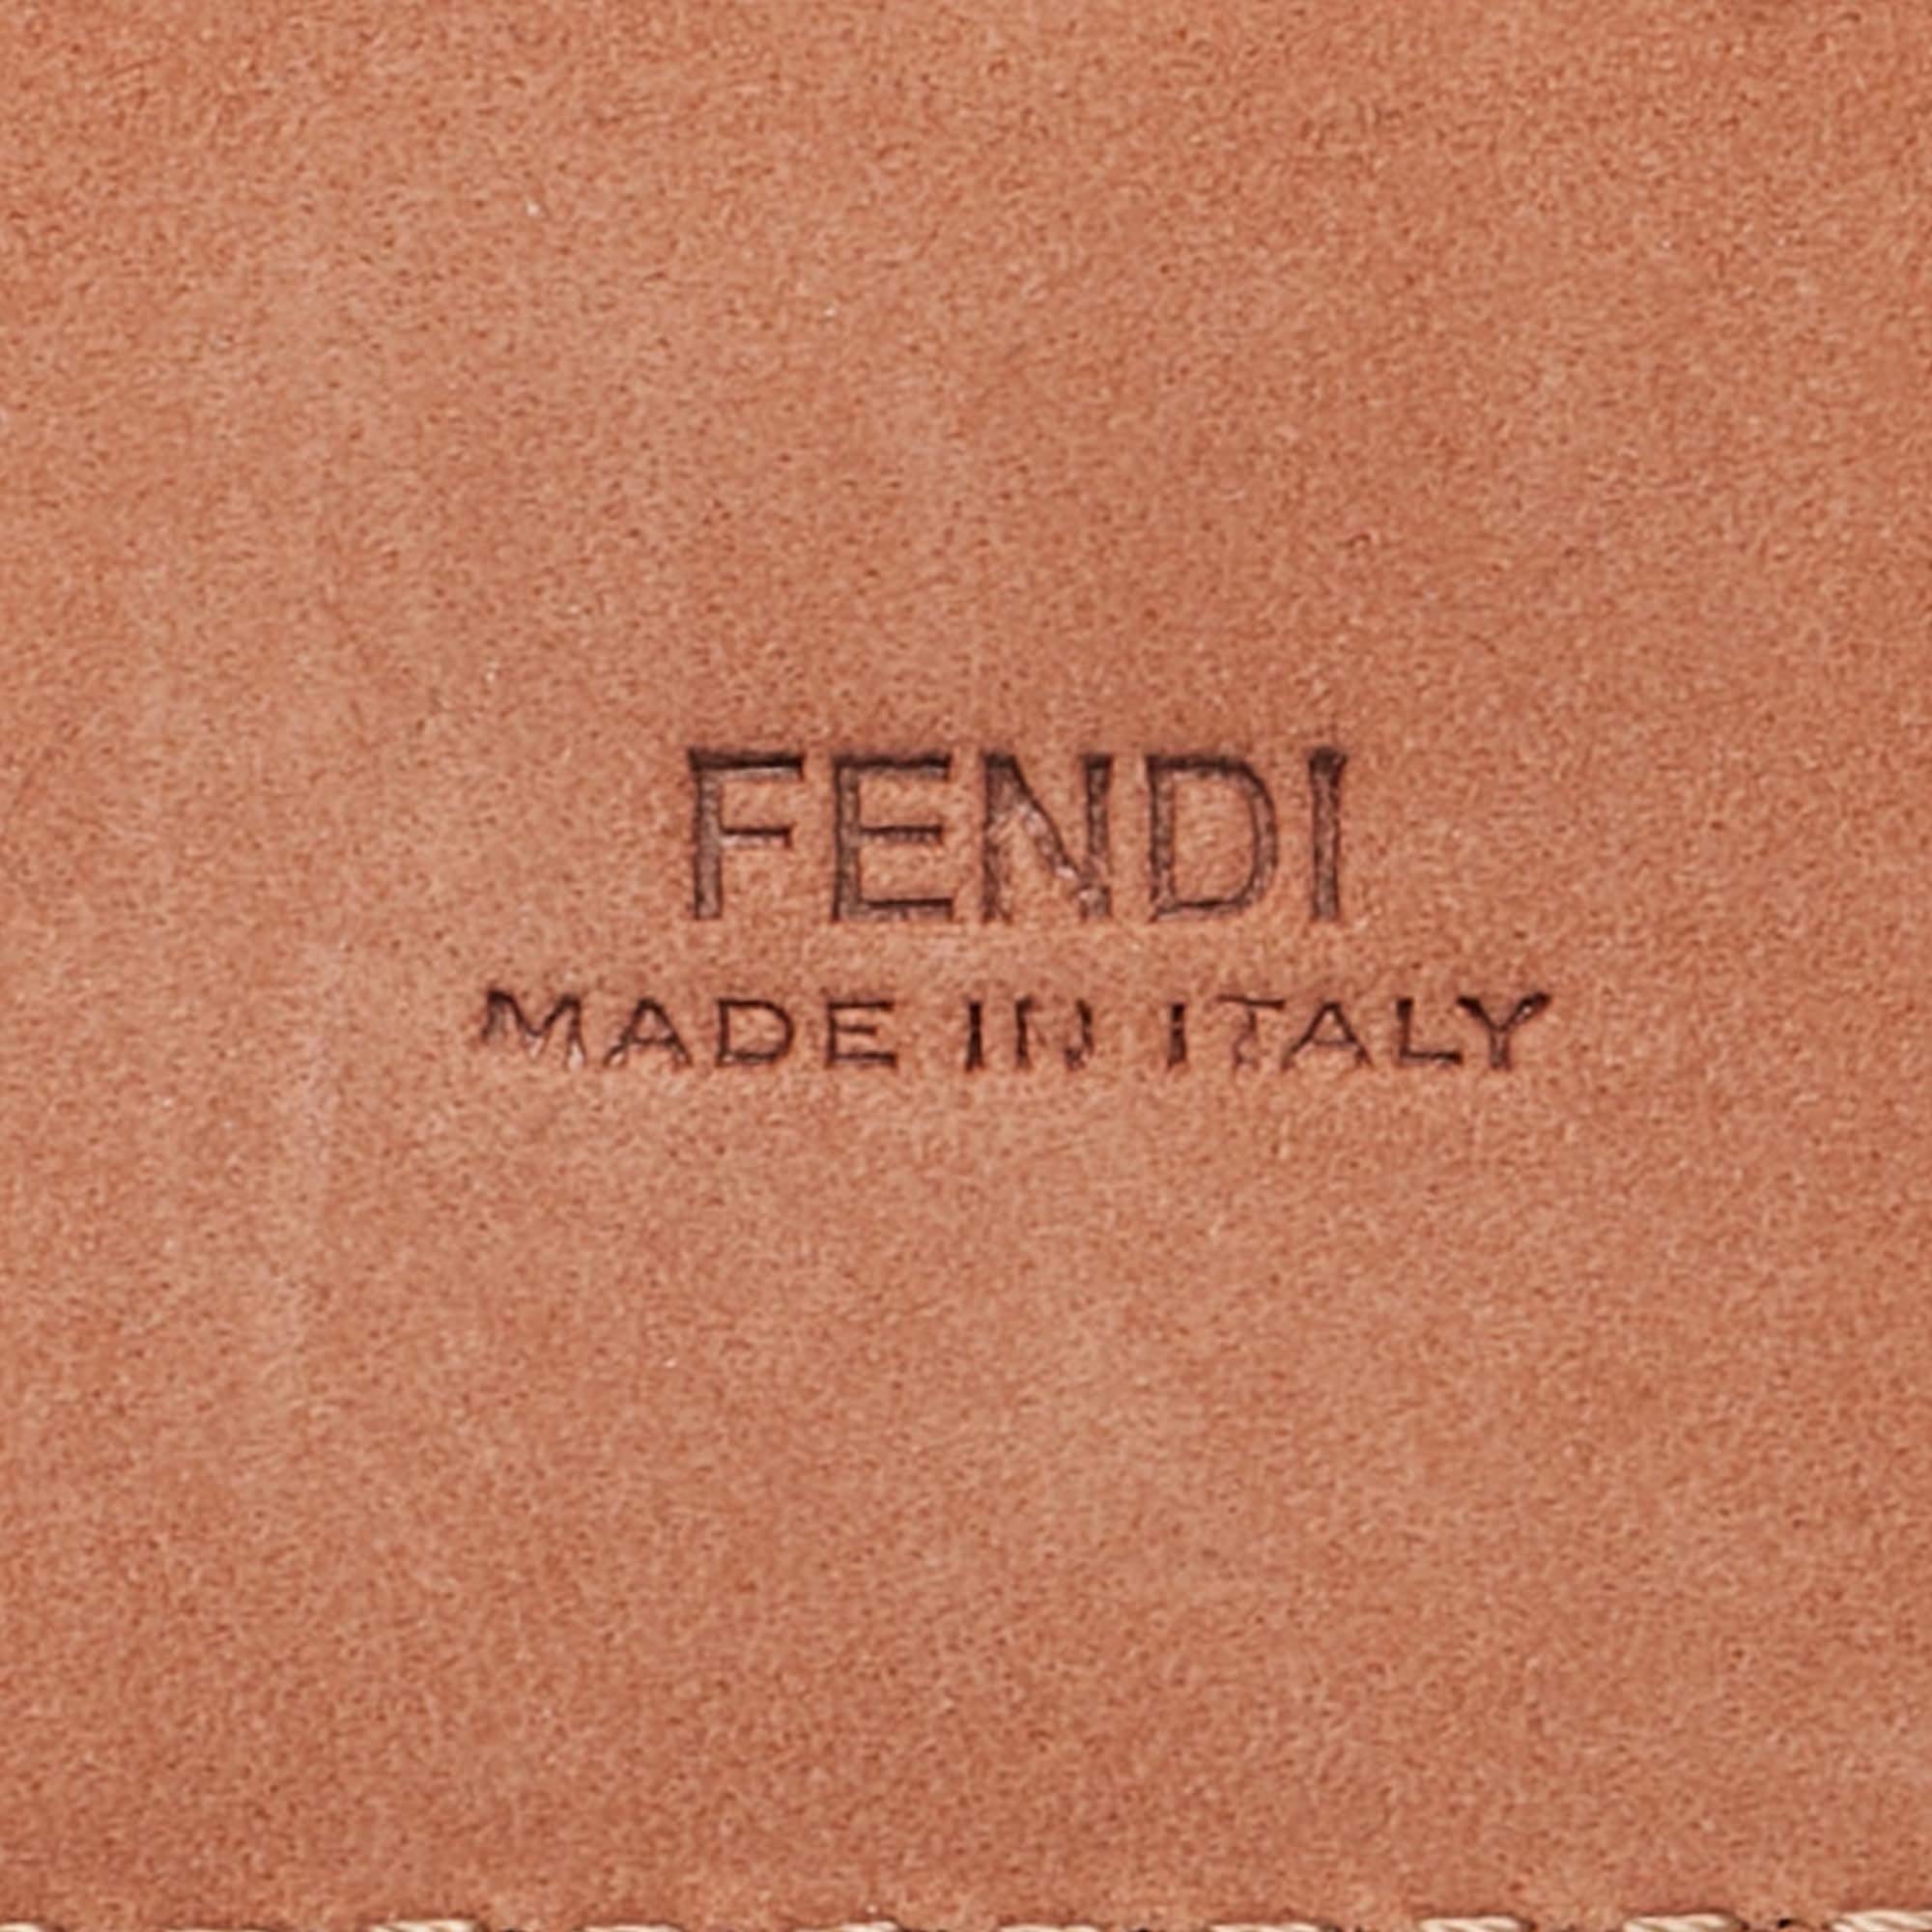 Fendi Multicolor Printed Leather Studded Belt 85 CM 2